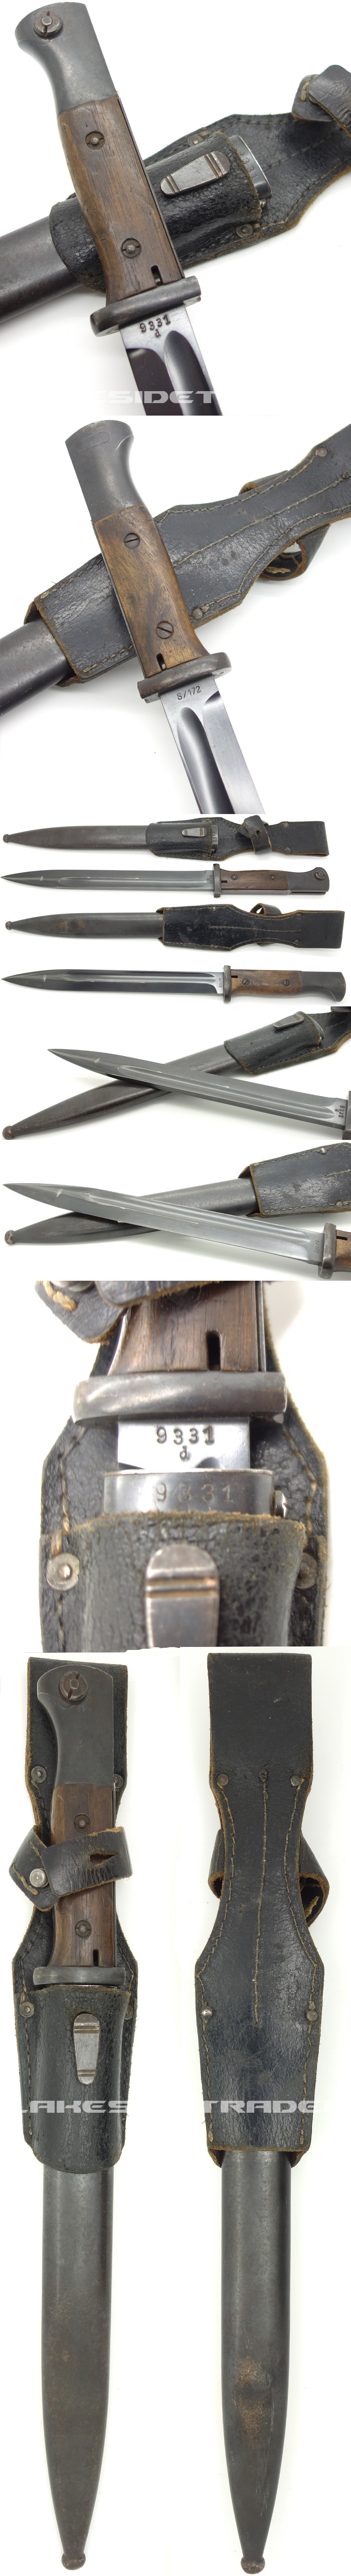 Matching - K98 Bayonet by S/172 37